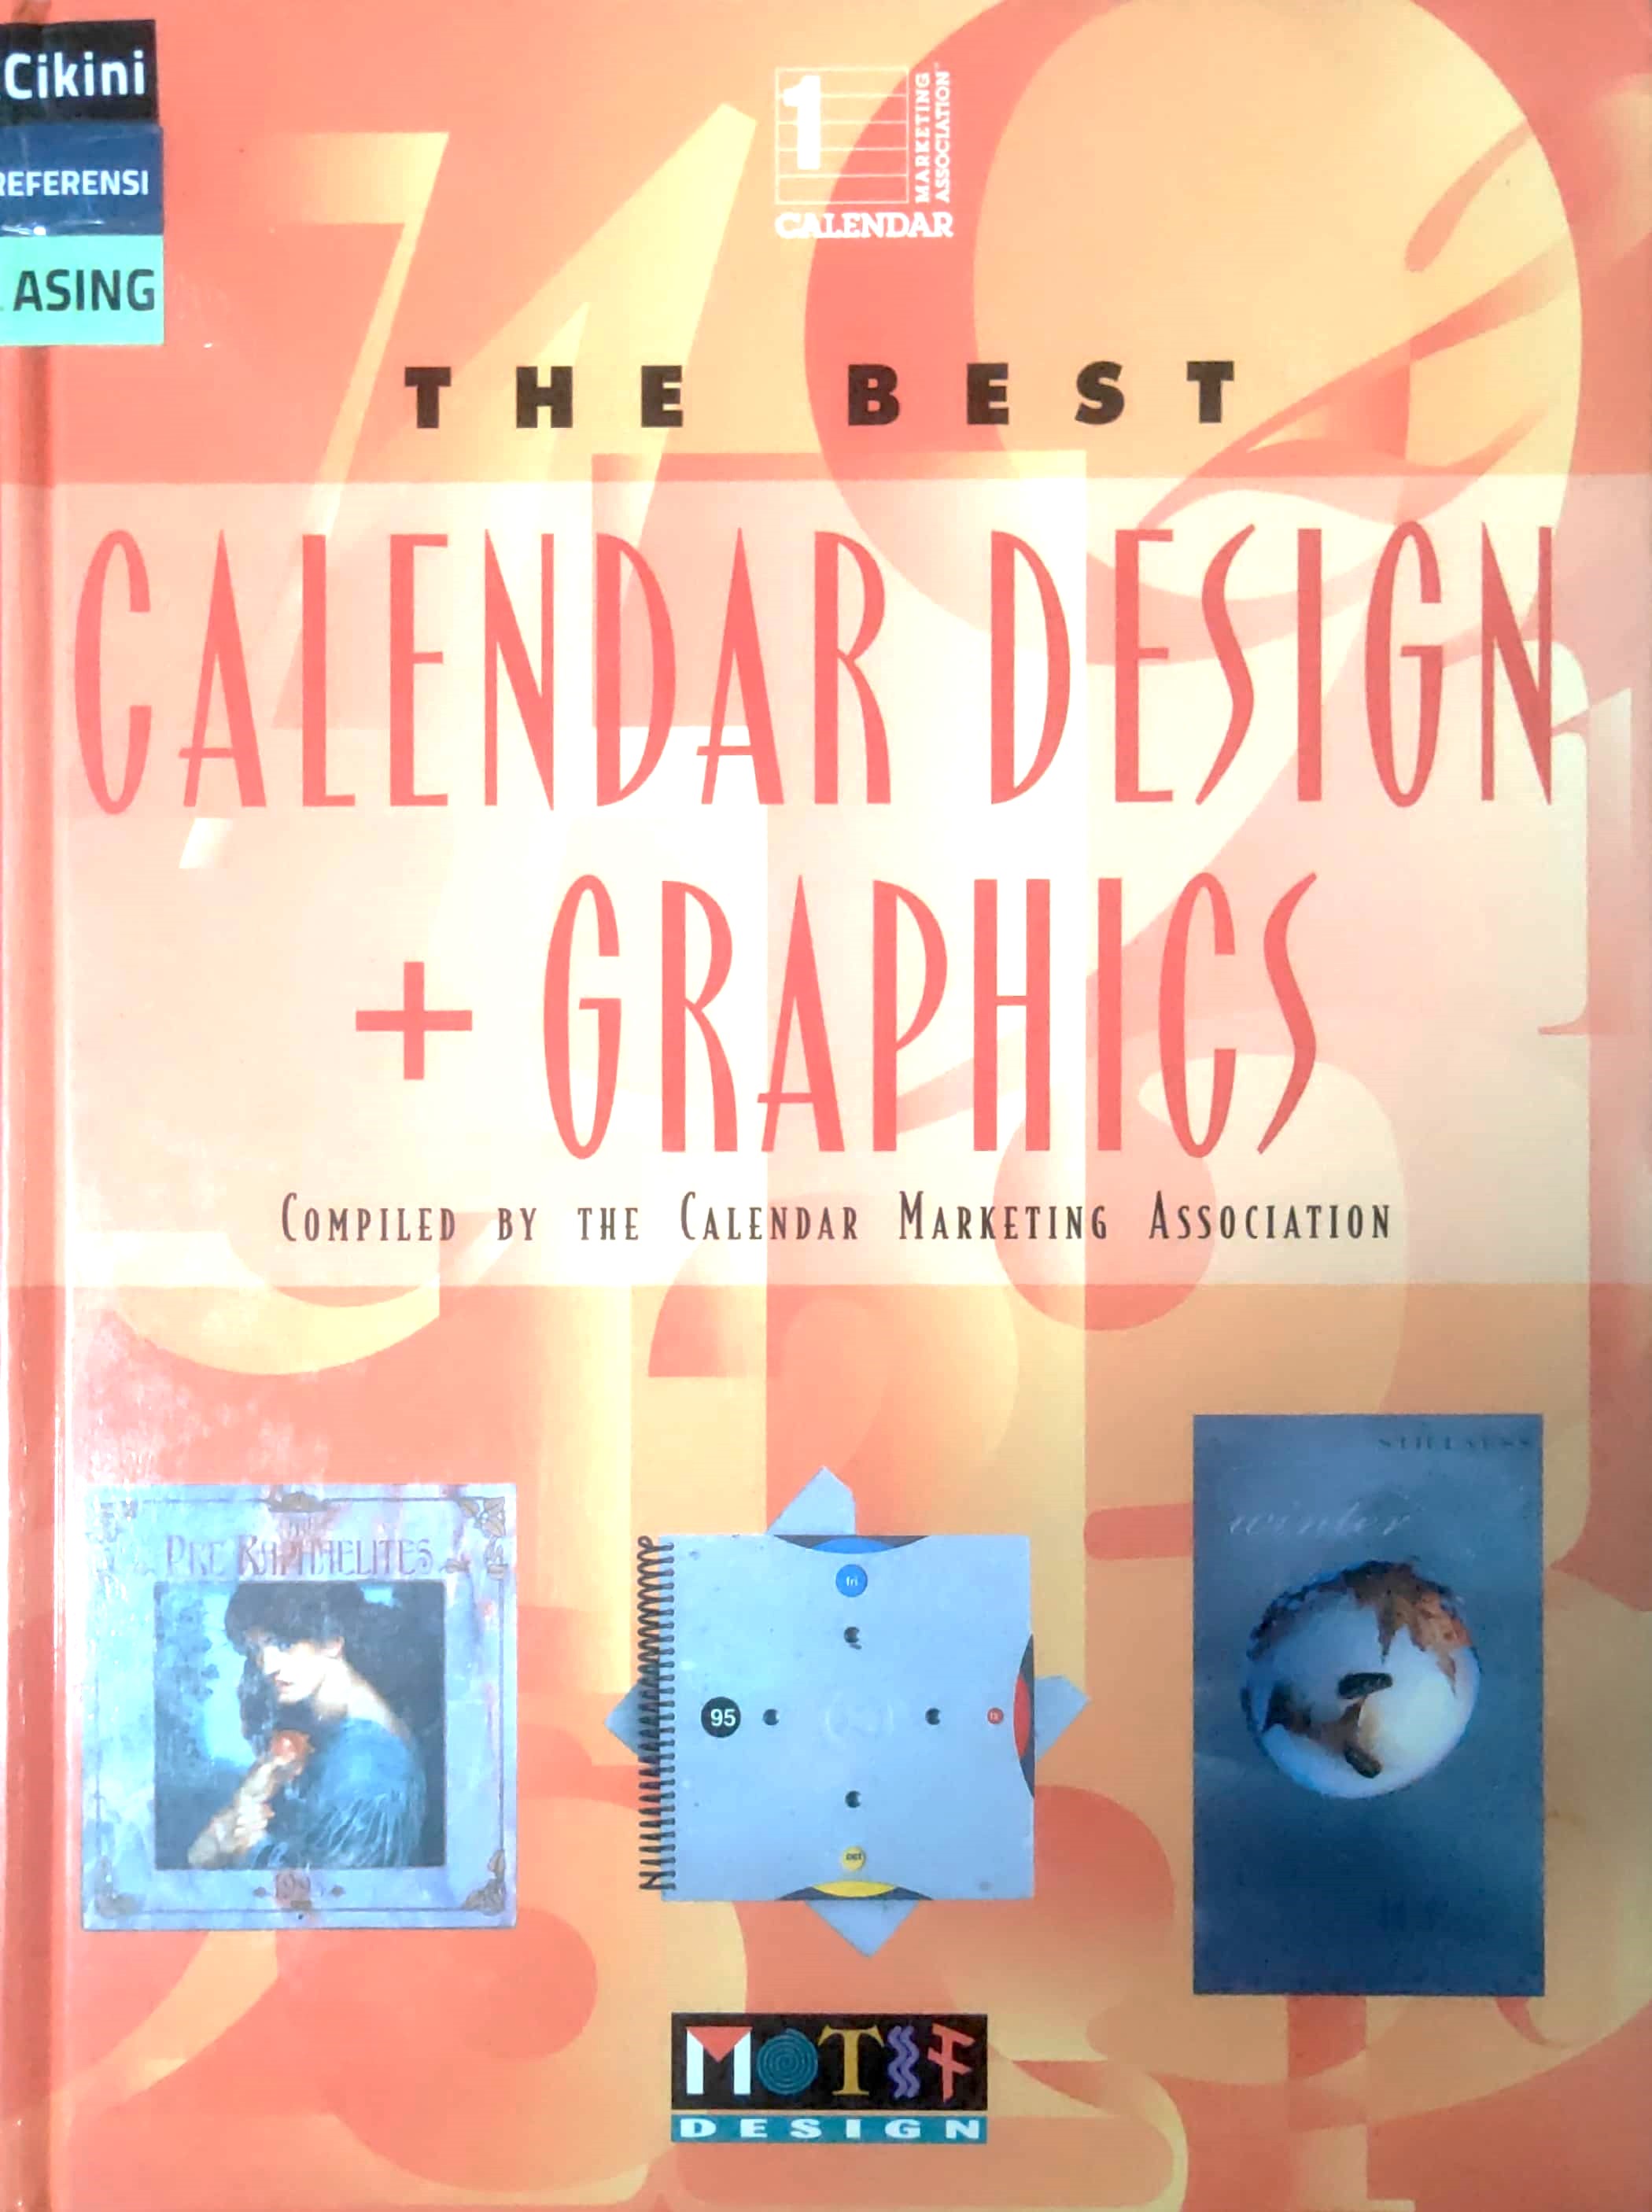 The best calendar design + graphics